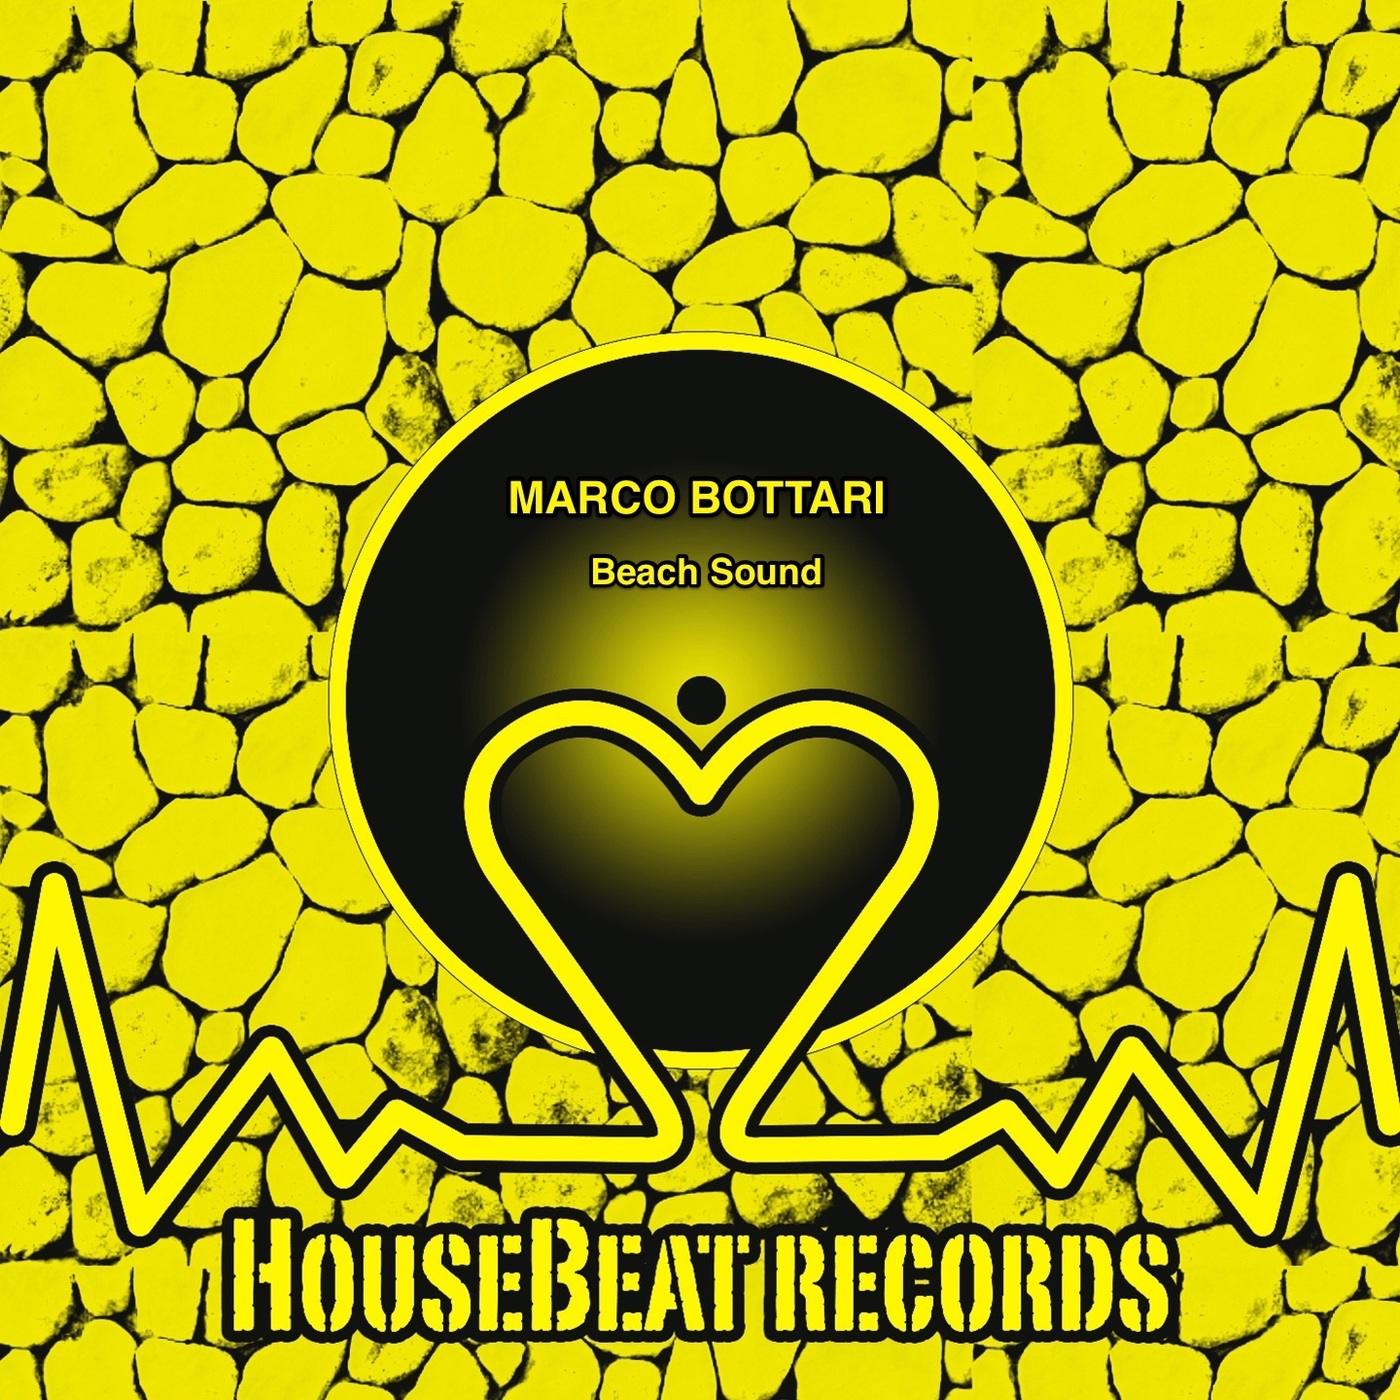 Marco Bottari - Beach Sound / HouseBeat Records